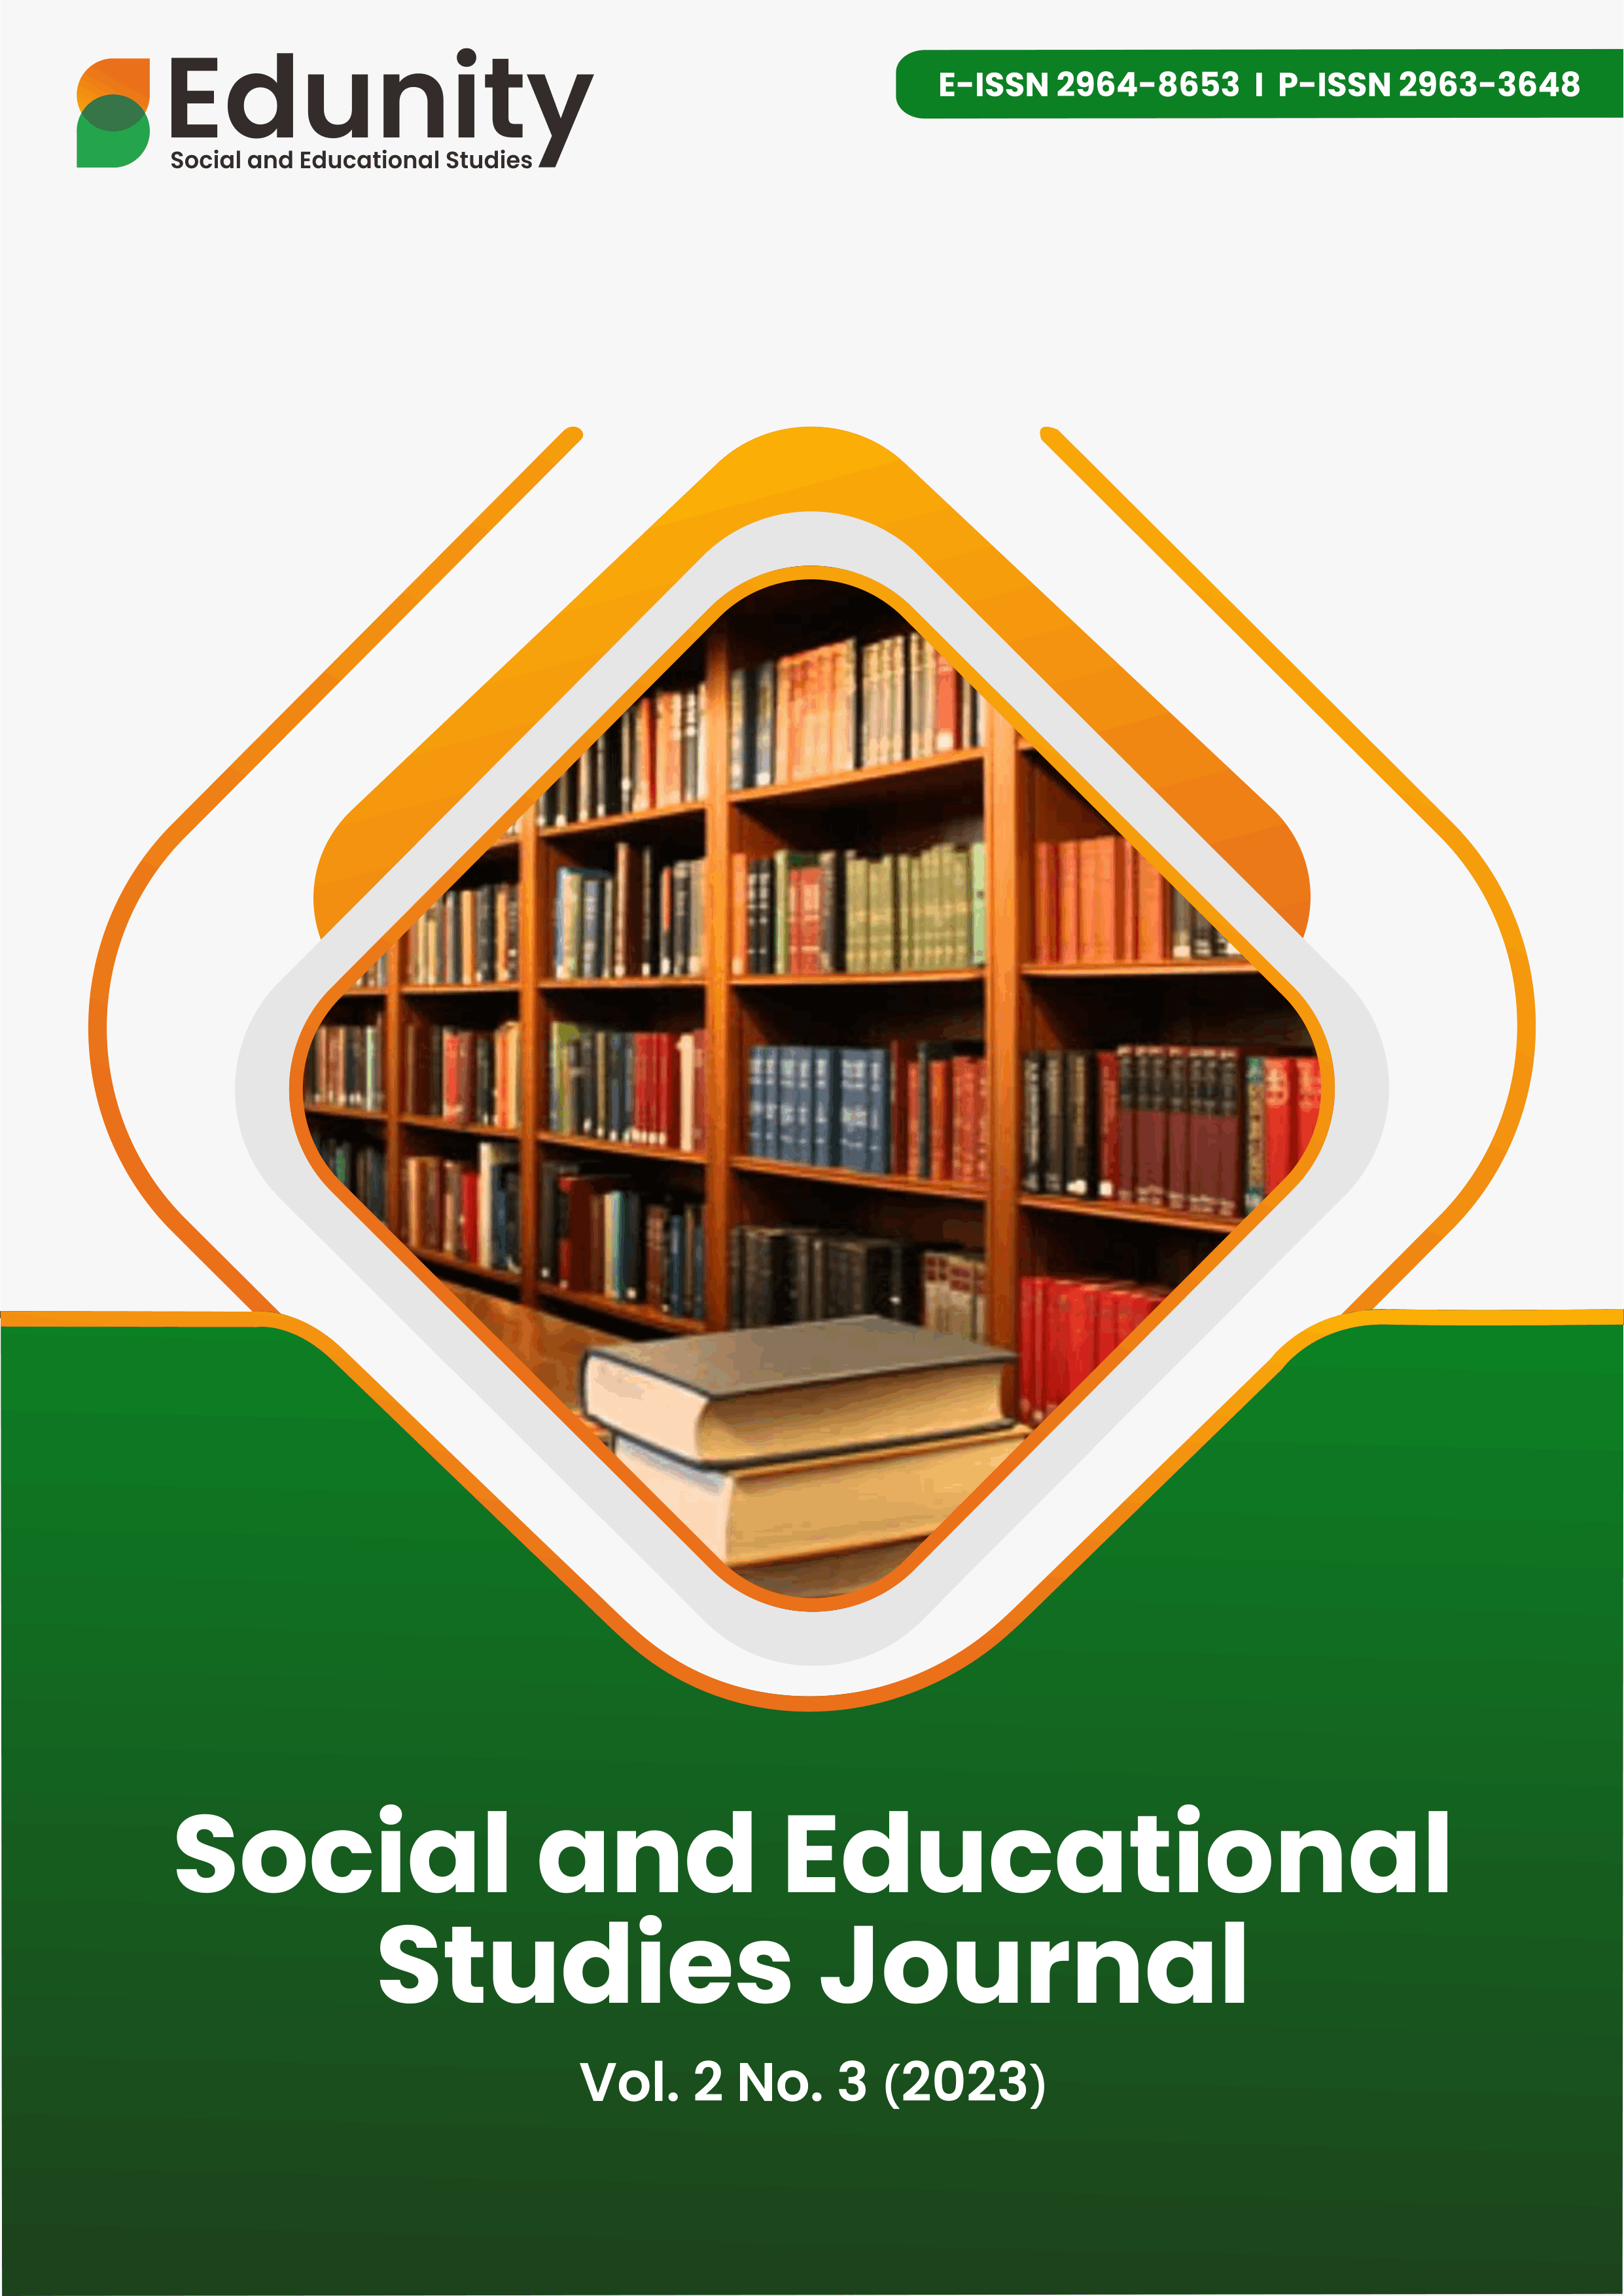 					View Vol. 2 No. 3 (2023): Edunity : Social and Educational Studies
				